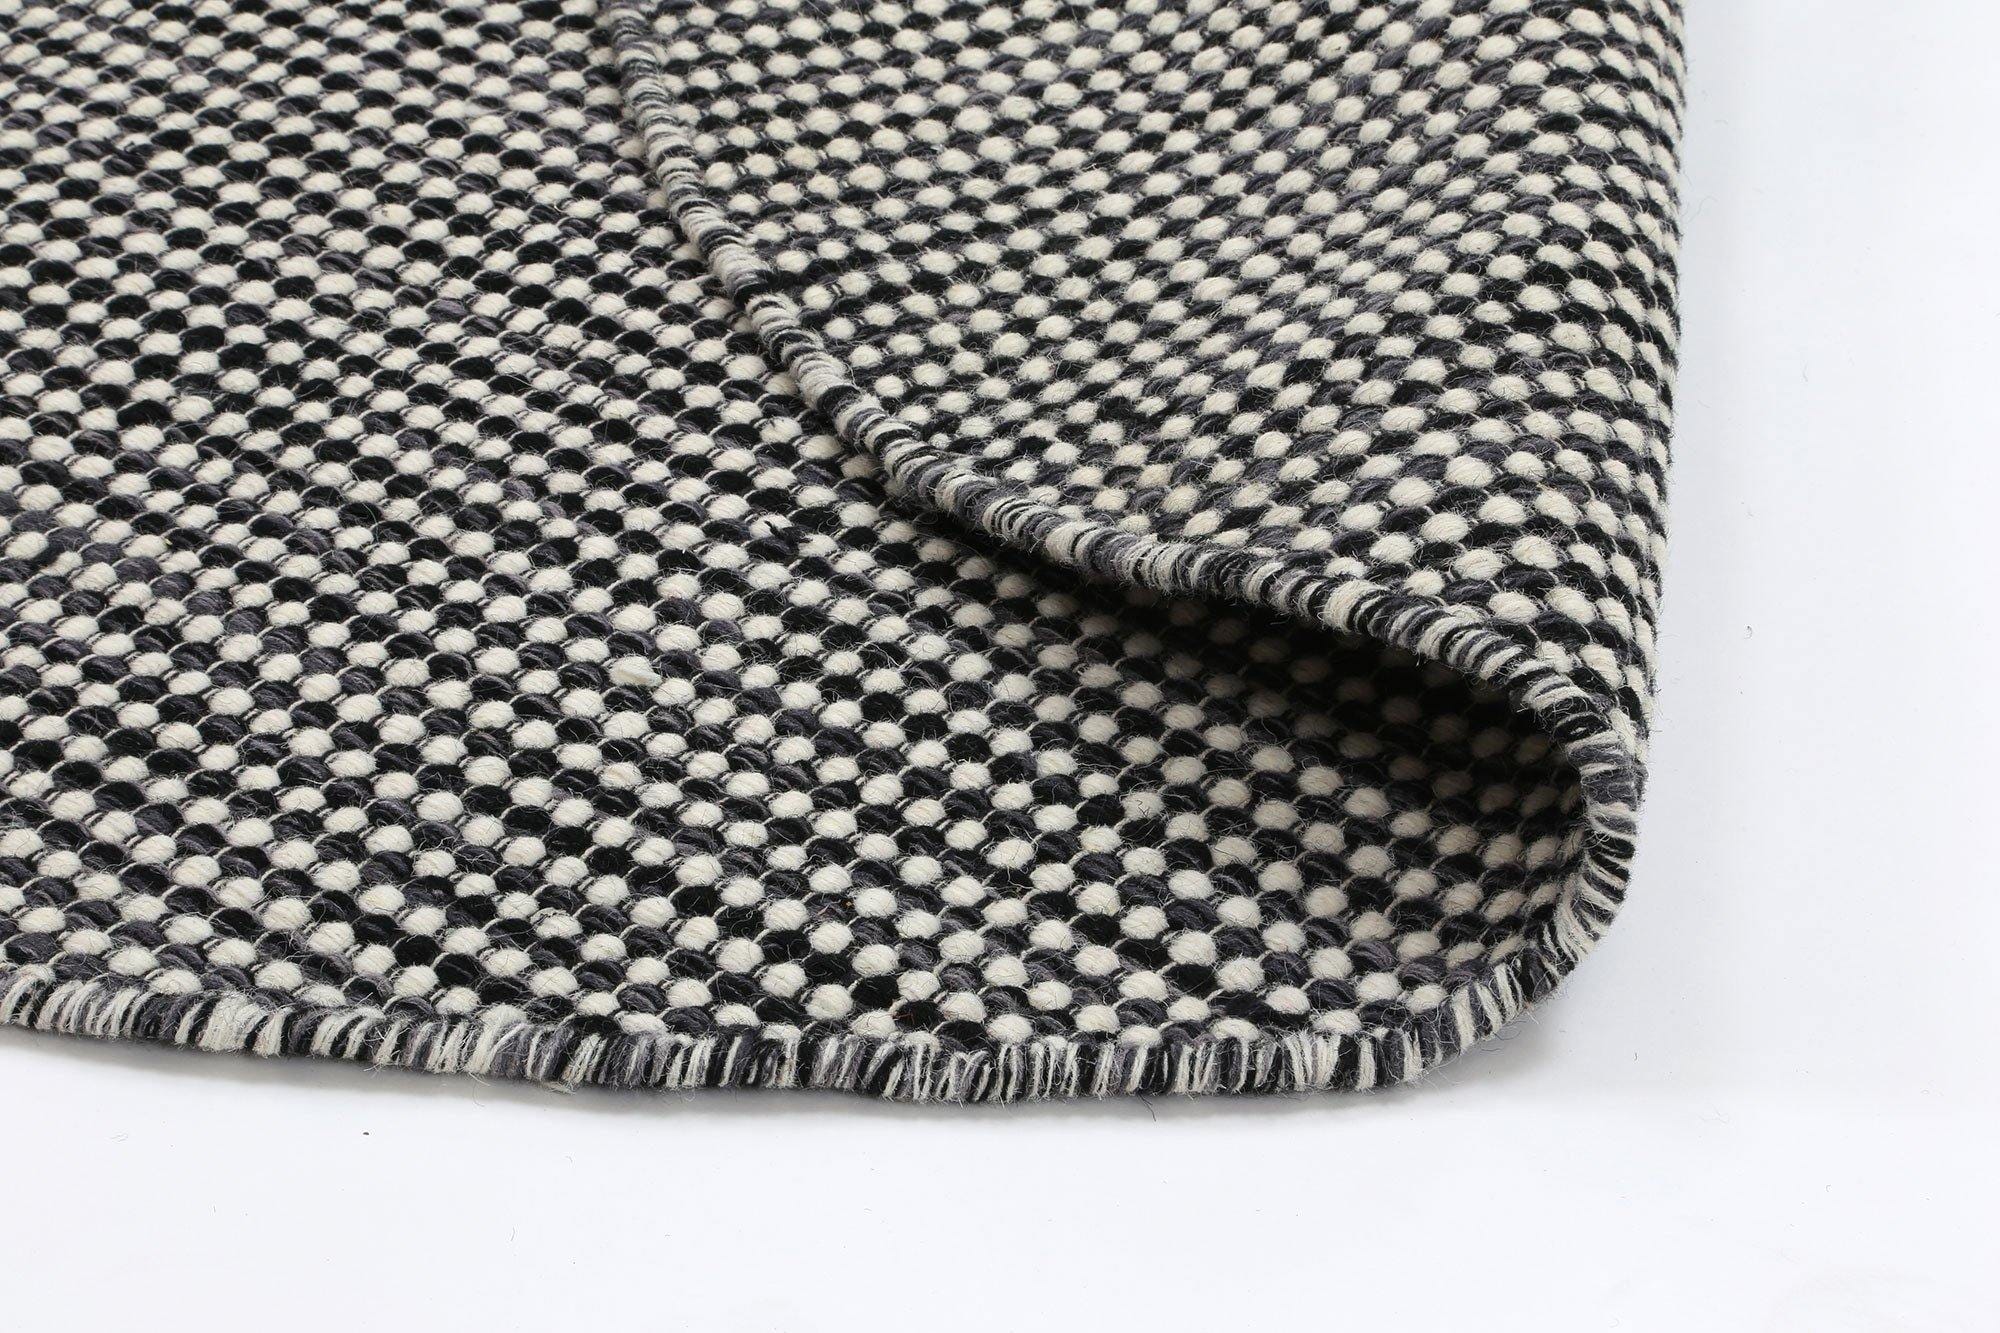 Brand Ventures Rugs Nordi Charcoal Grey Reversible Wool Round Rug